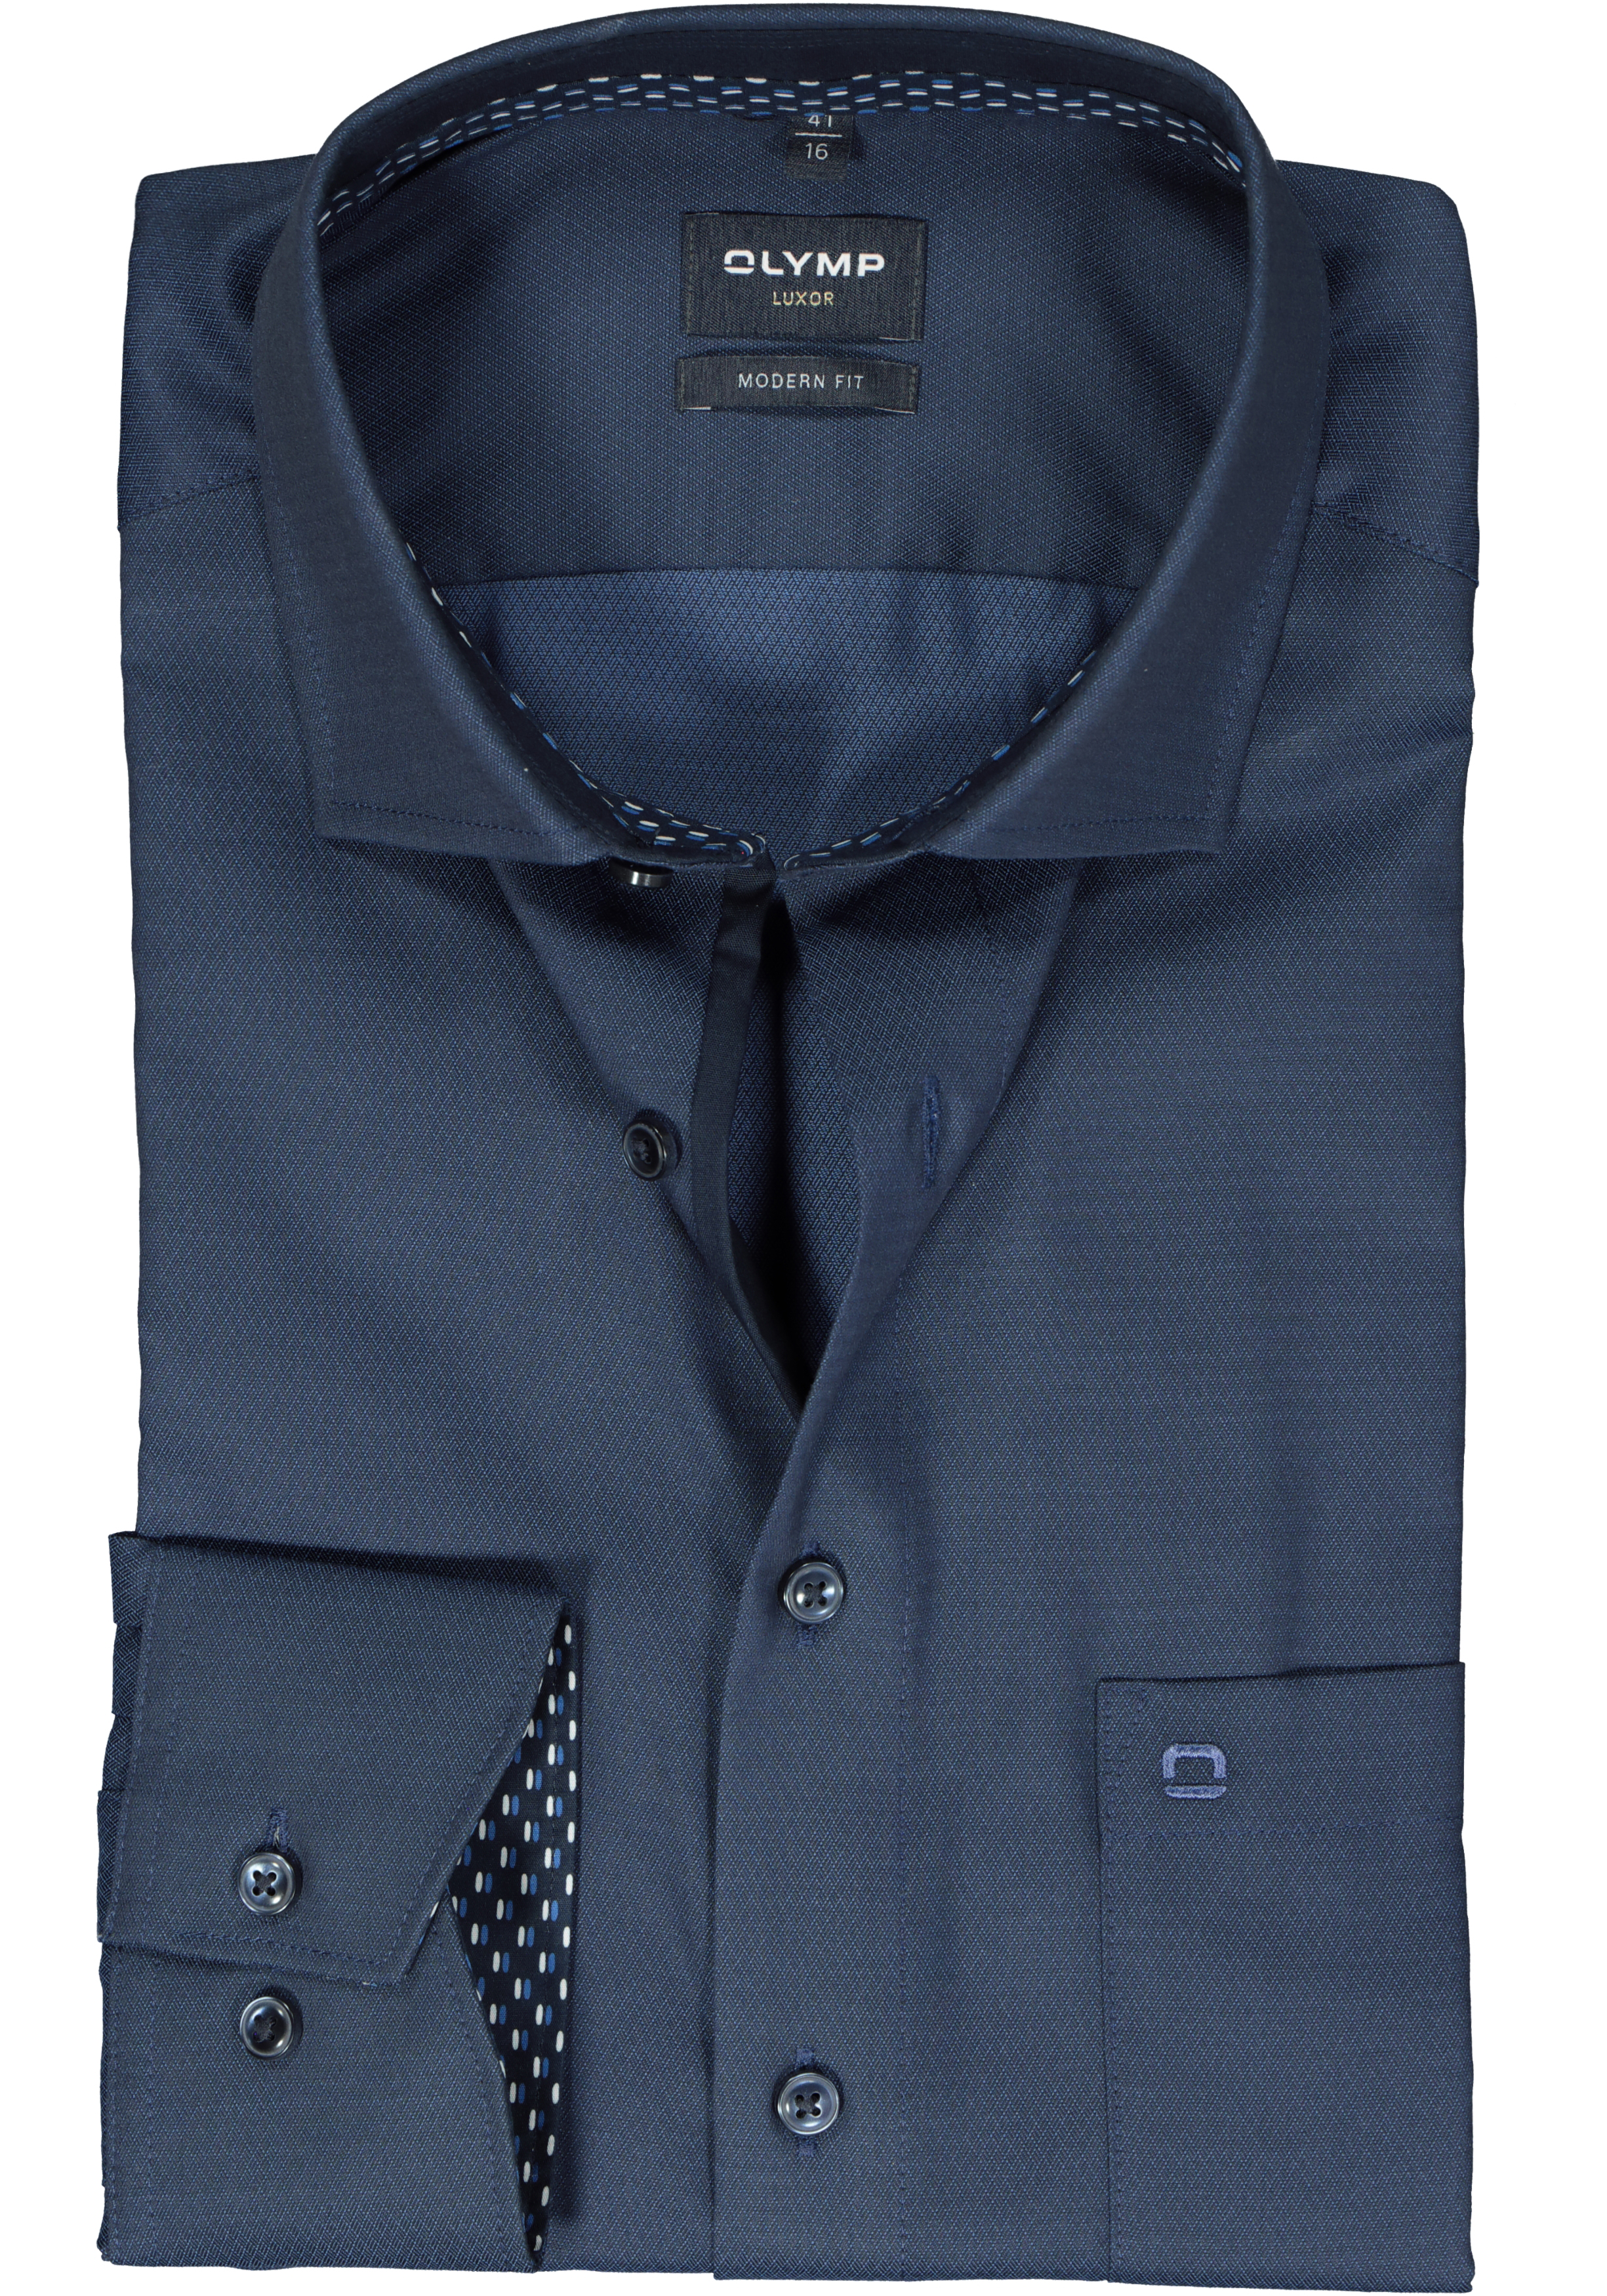 OLYMP modern fit overhemd, structuur, nachtblauw (contrast)